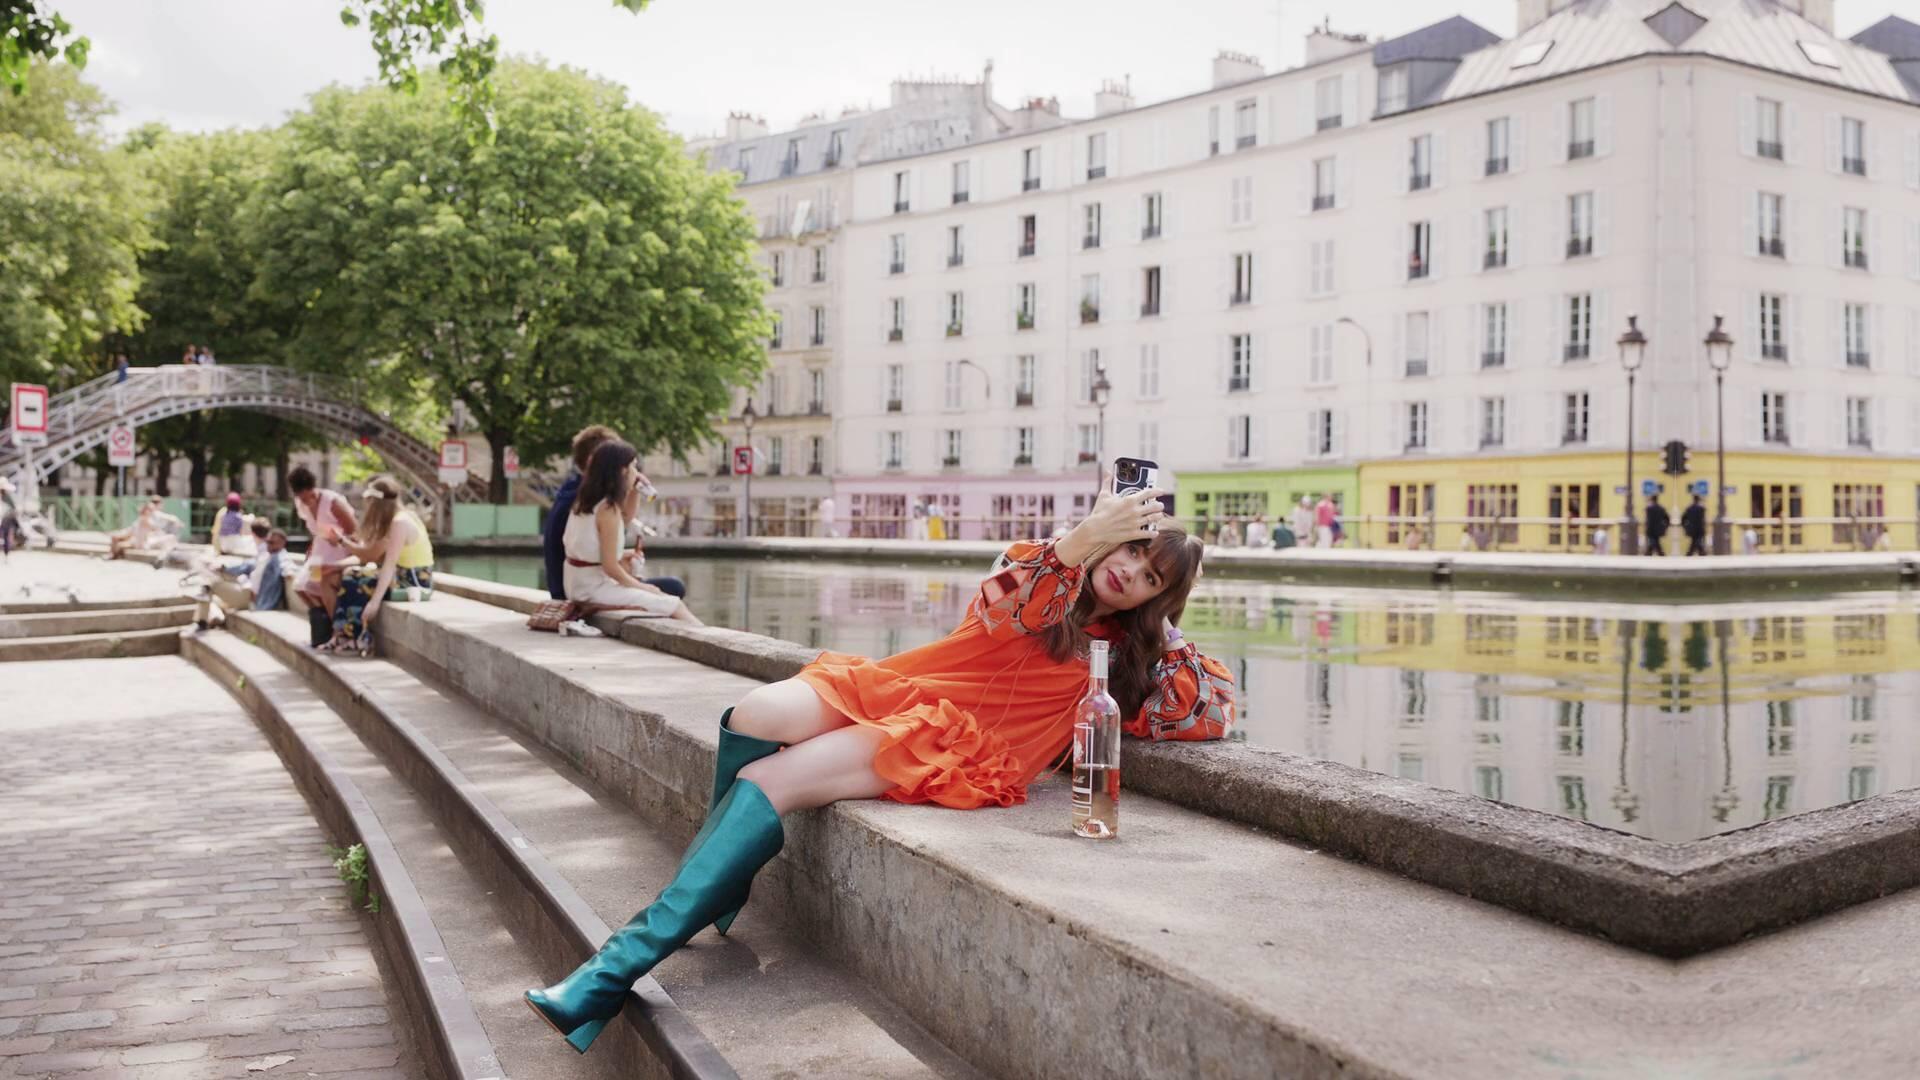 Lily Collins - Emily in Paris | Season 3 Episode 4 | Ashley Park style